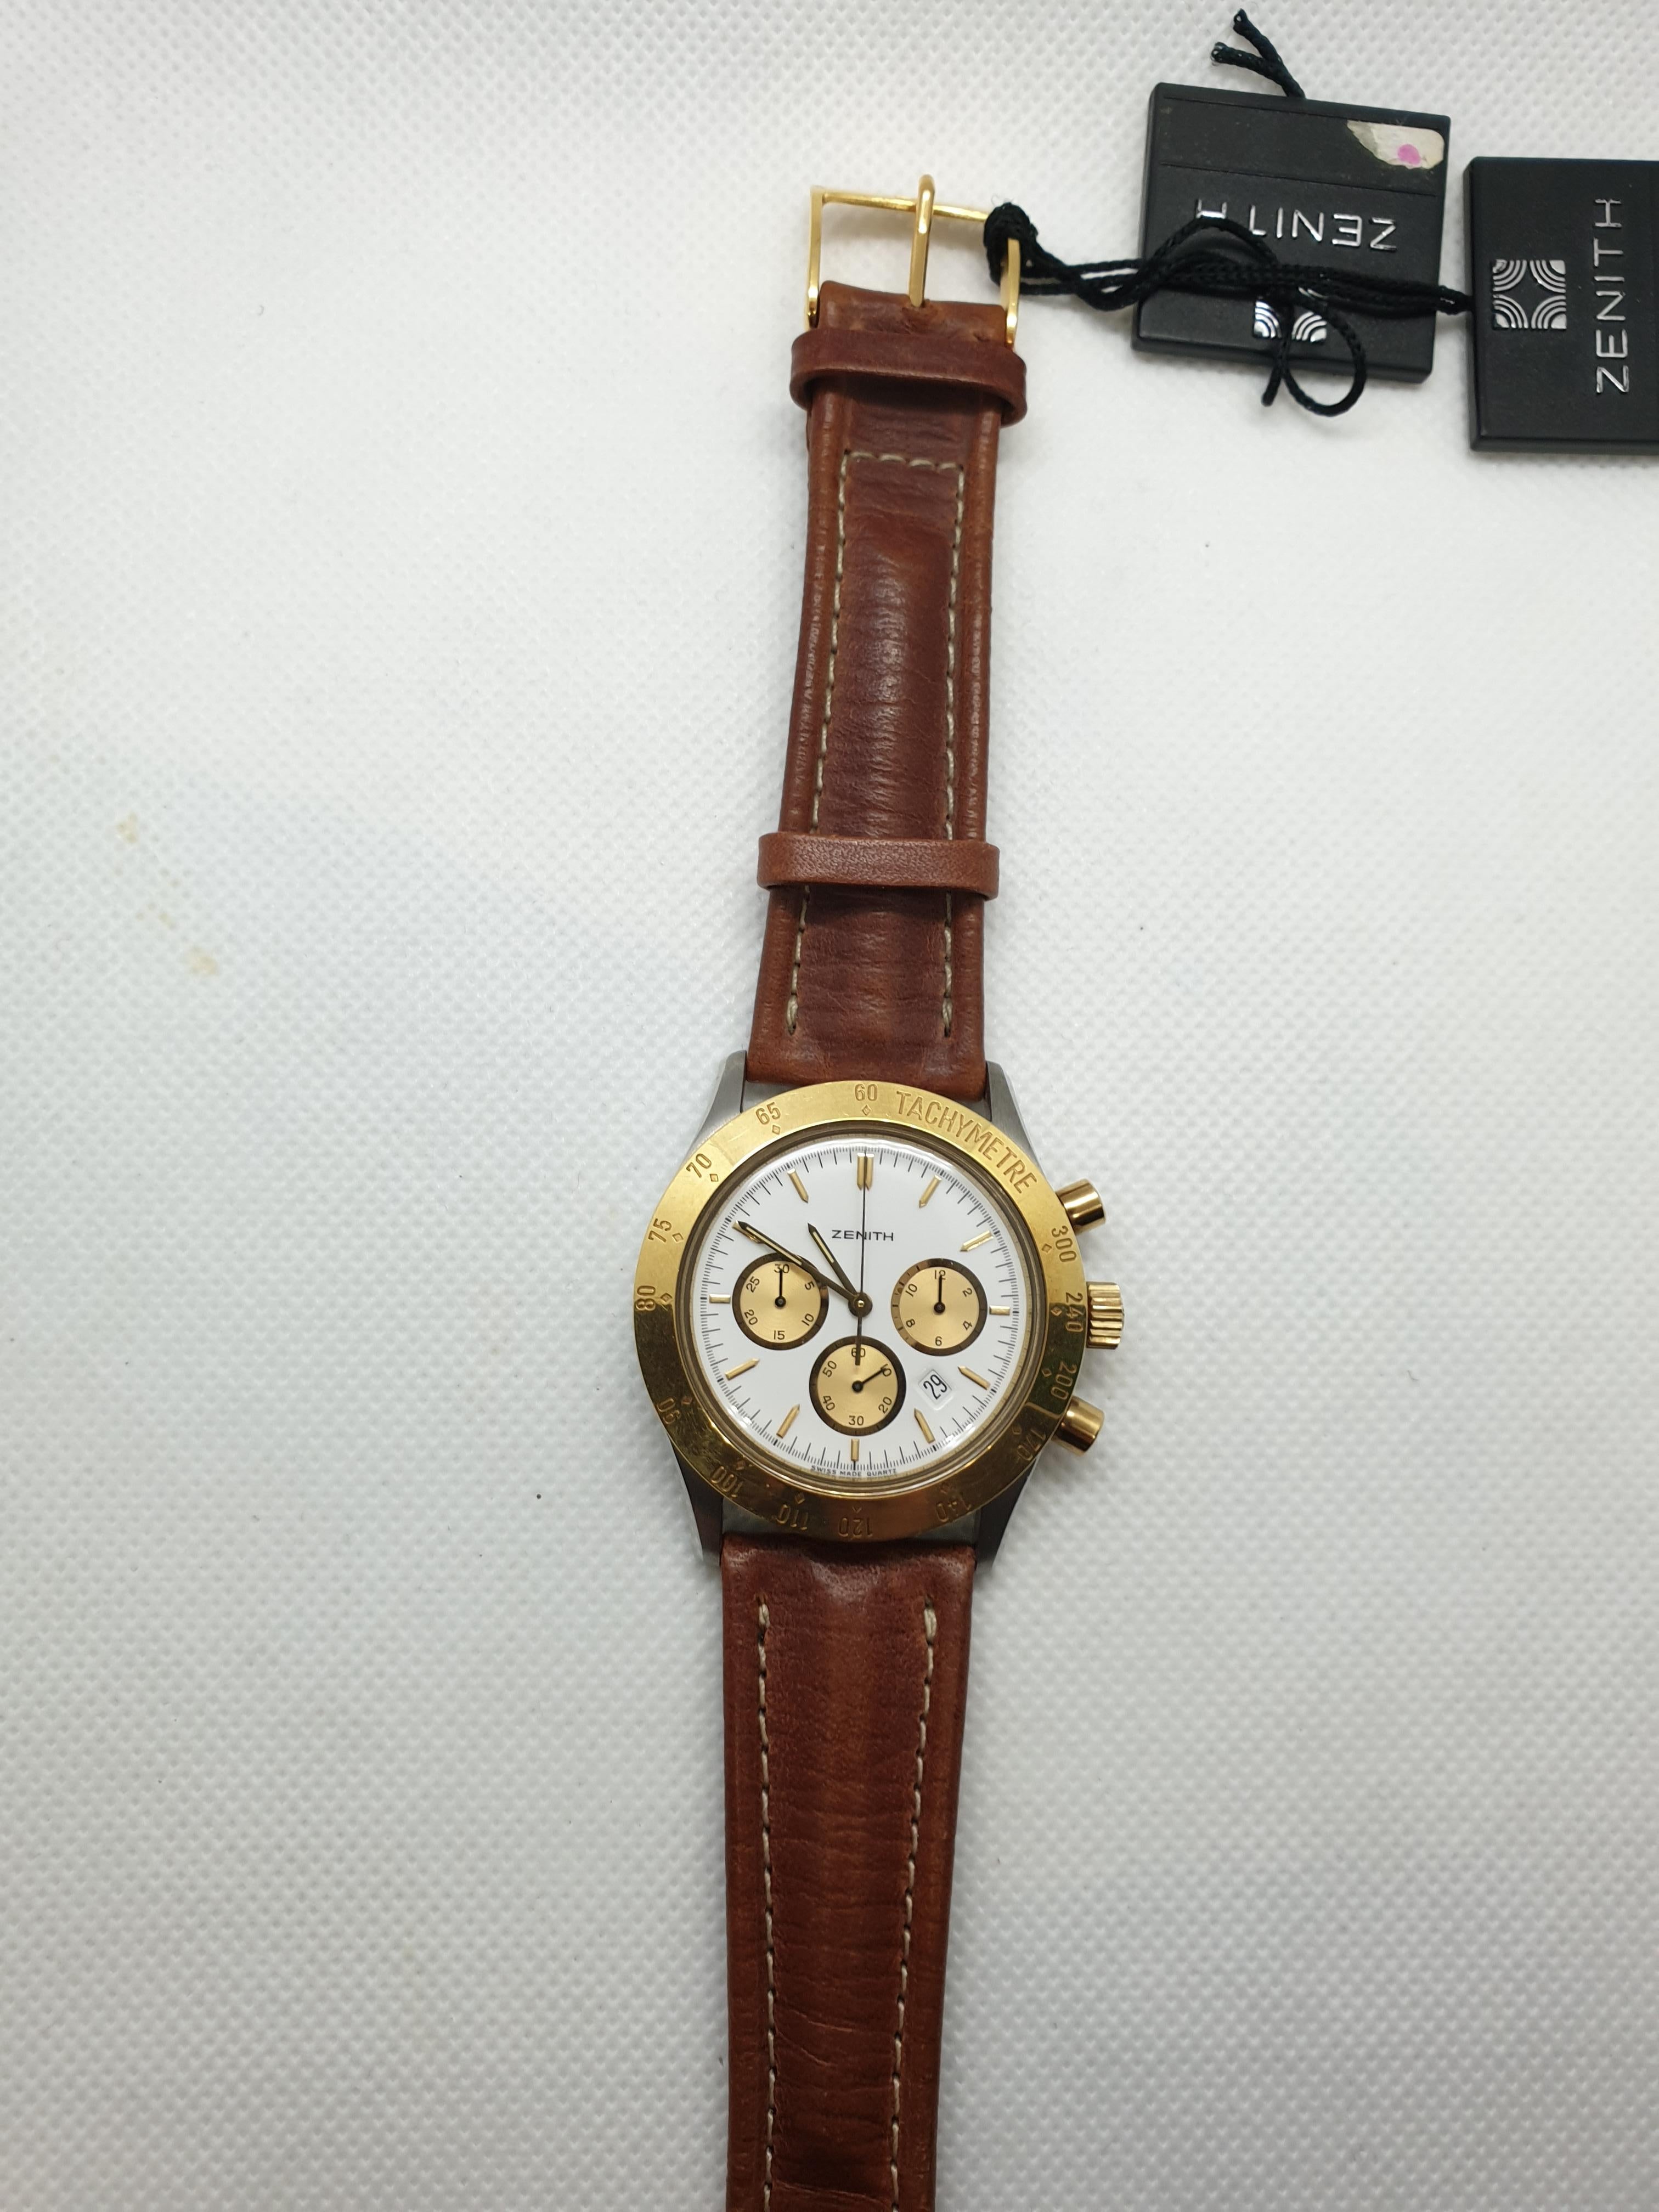 Zenith Steel and Gold Quartz Cronograph Wrist Watch Ref.38.0010.430, 1990s For Sale 5